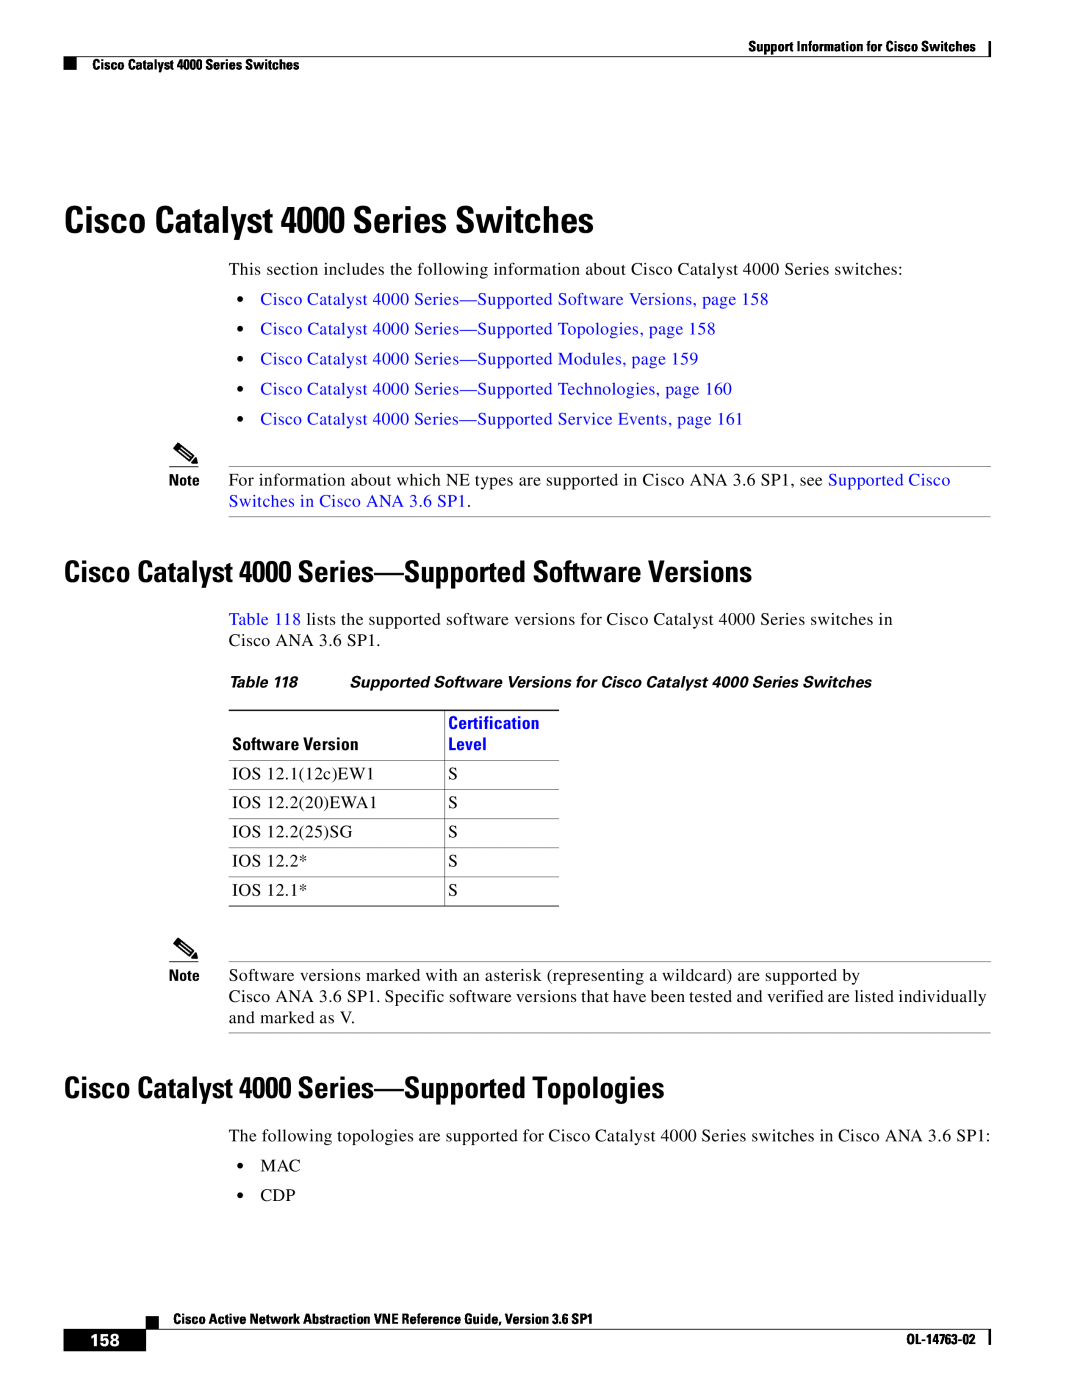 Cisco Systems OL-14763-02 Cisco Catalyst 4000 Series Switches, Cisco Catalyst 4000 Series-Supported Software Versions 